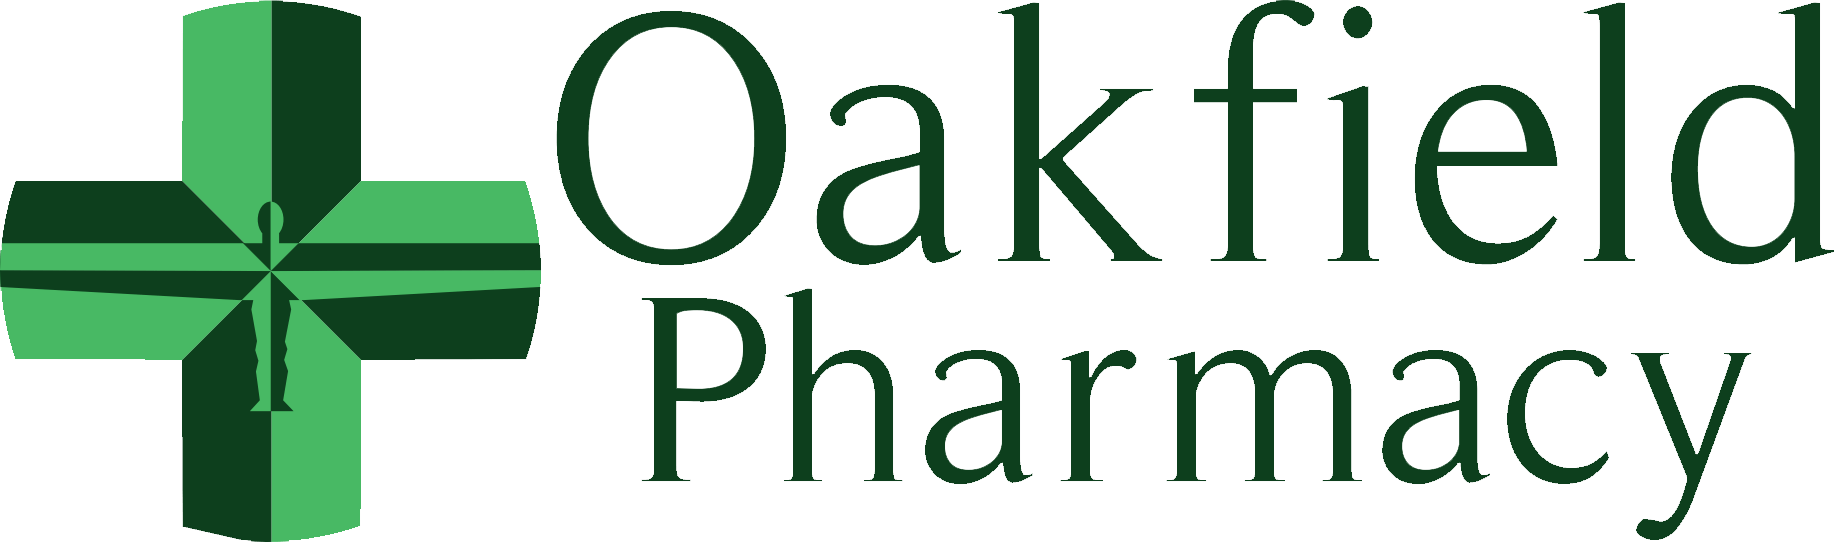 Oakfield Pharmacy